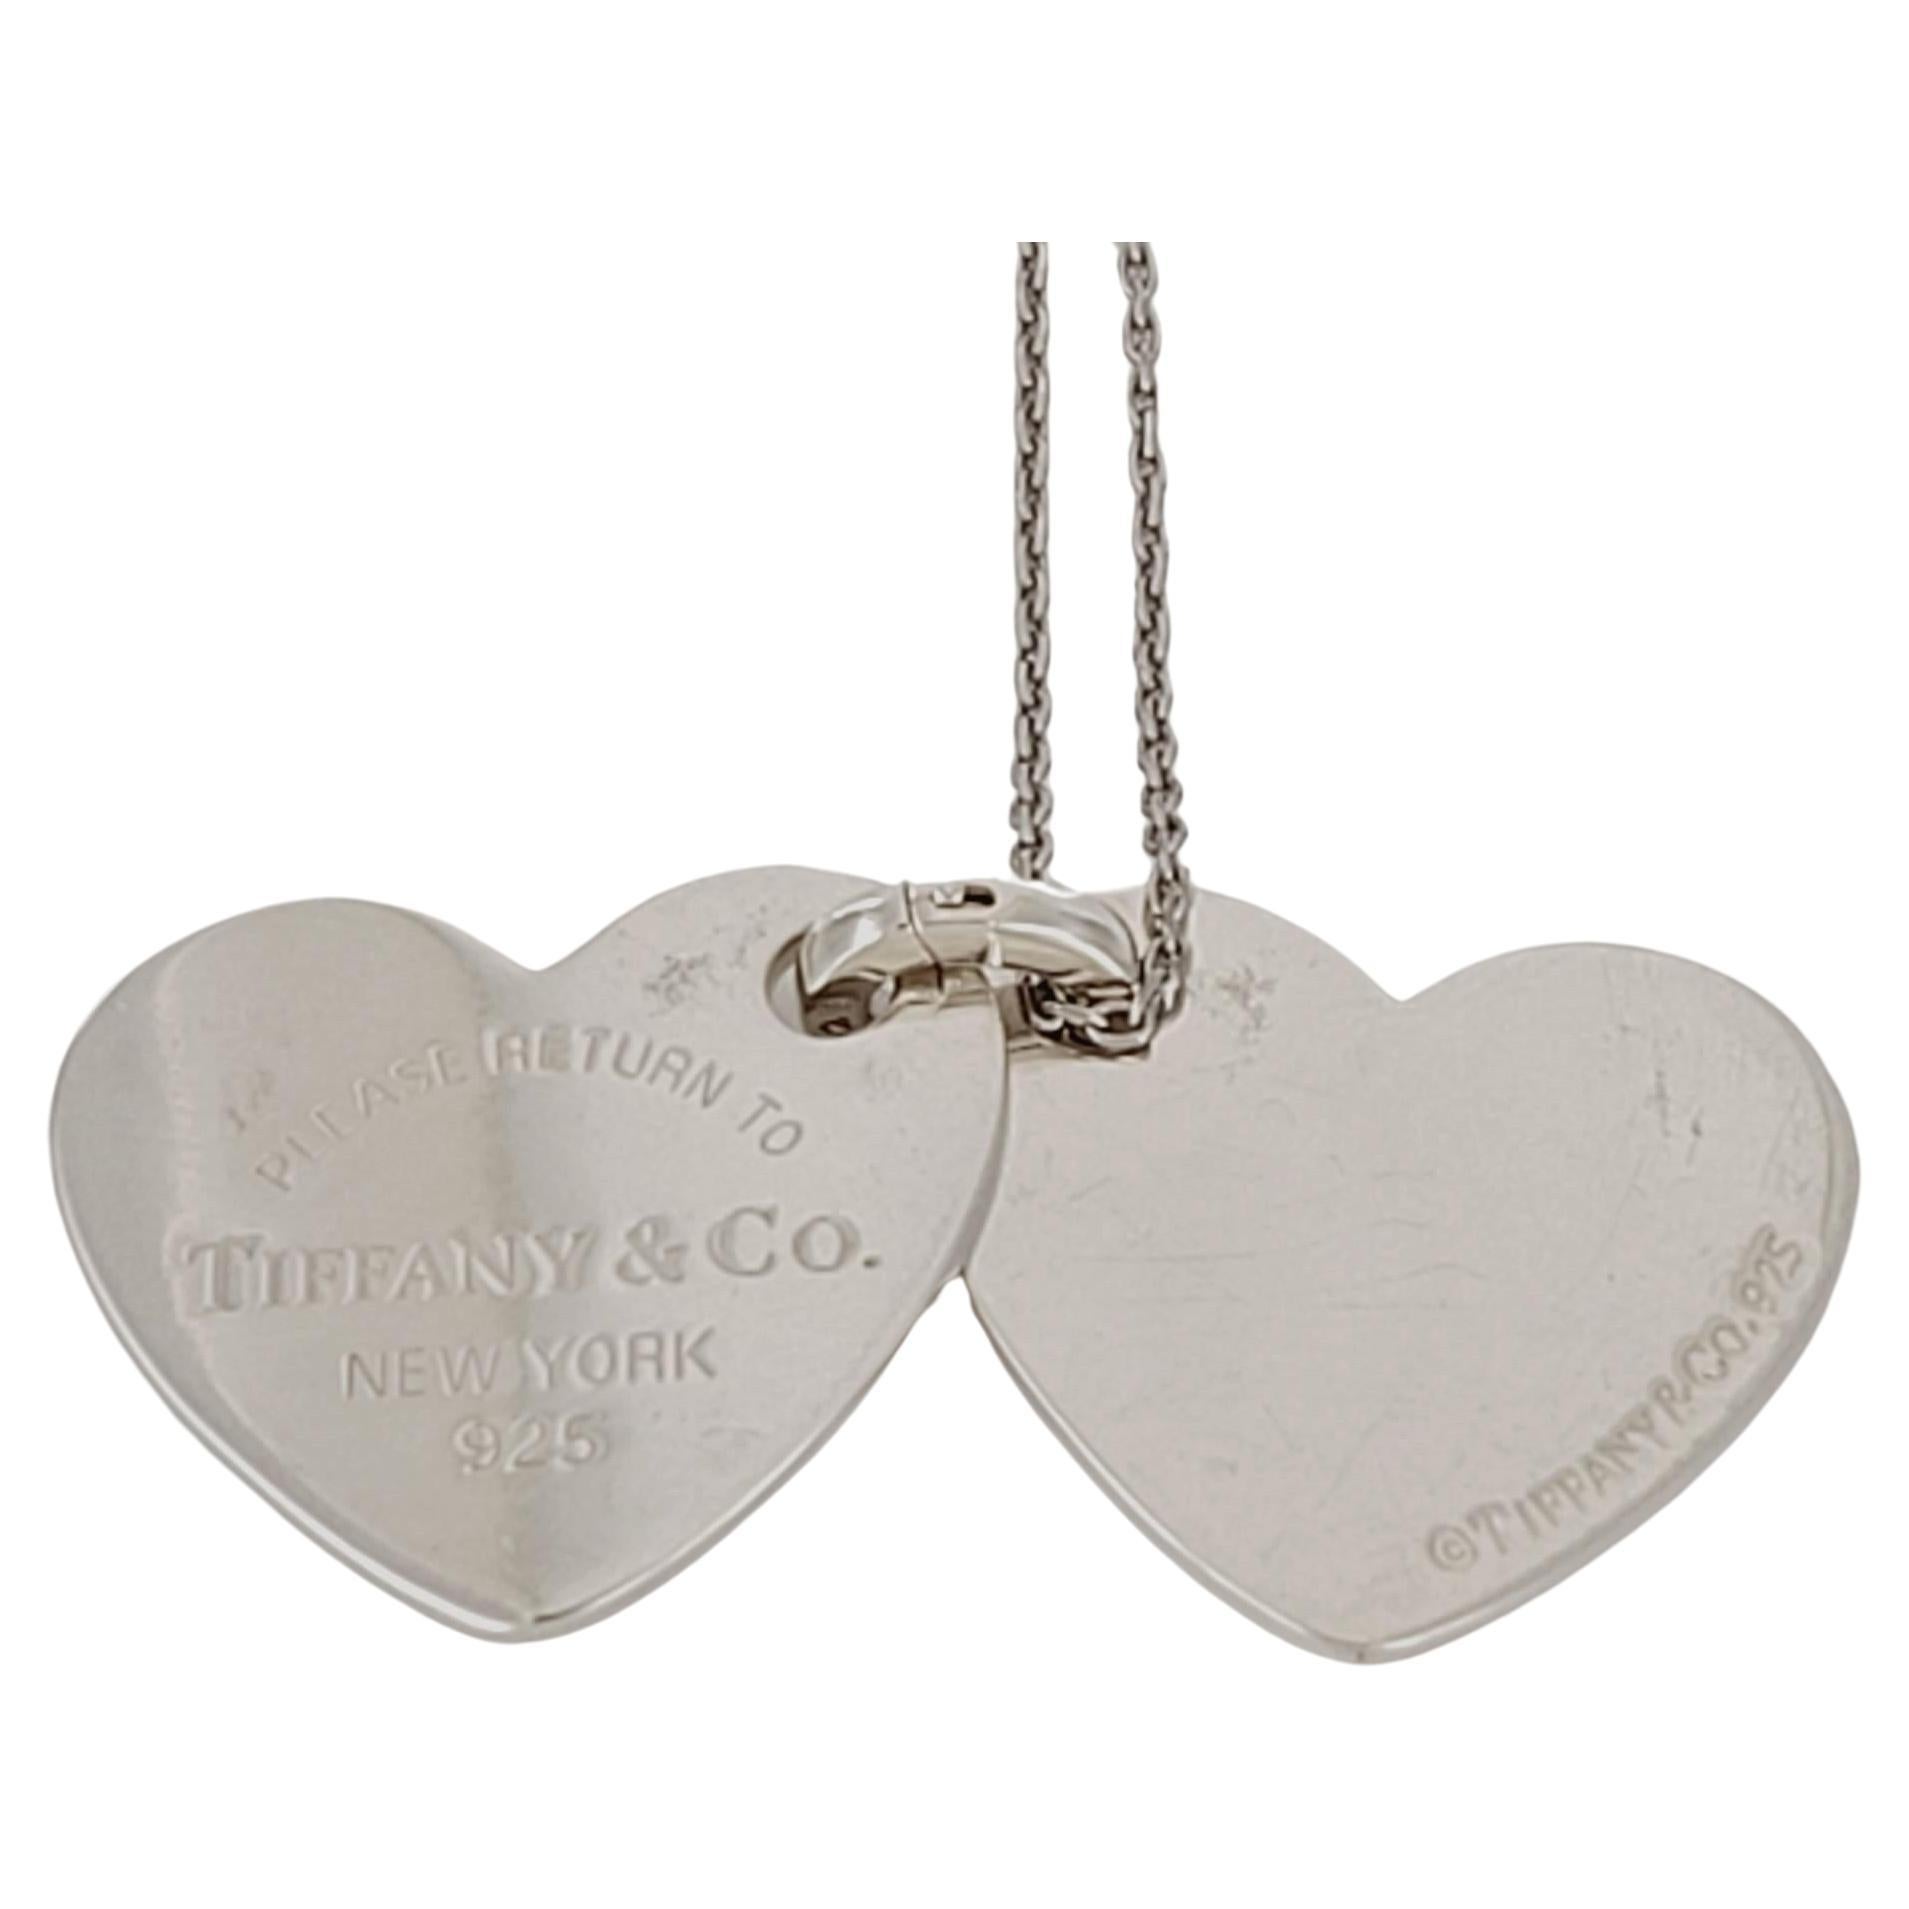 Rückkehr der Marke zu Tiffany & Co
Double Heart Charm Halskette
MATERIAL Sterling Silber925
Kettenlänge 18'' lang
Anhänger Dimension 16mm X 18.4mm
Gewicht 12,0 gr insgesamt
Zustand Pre-owned  
Kommt mit Tiffany & Co Etui